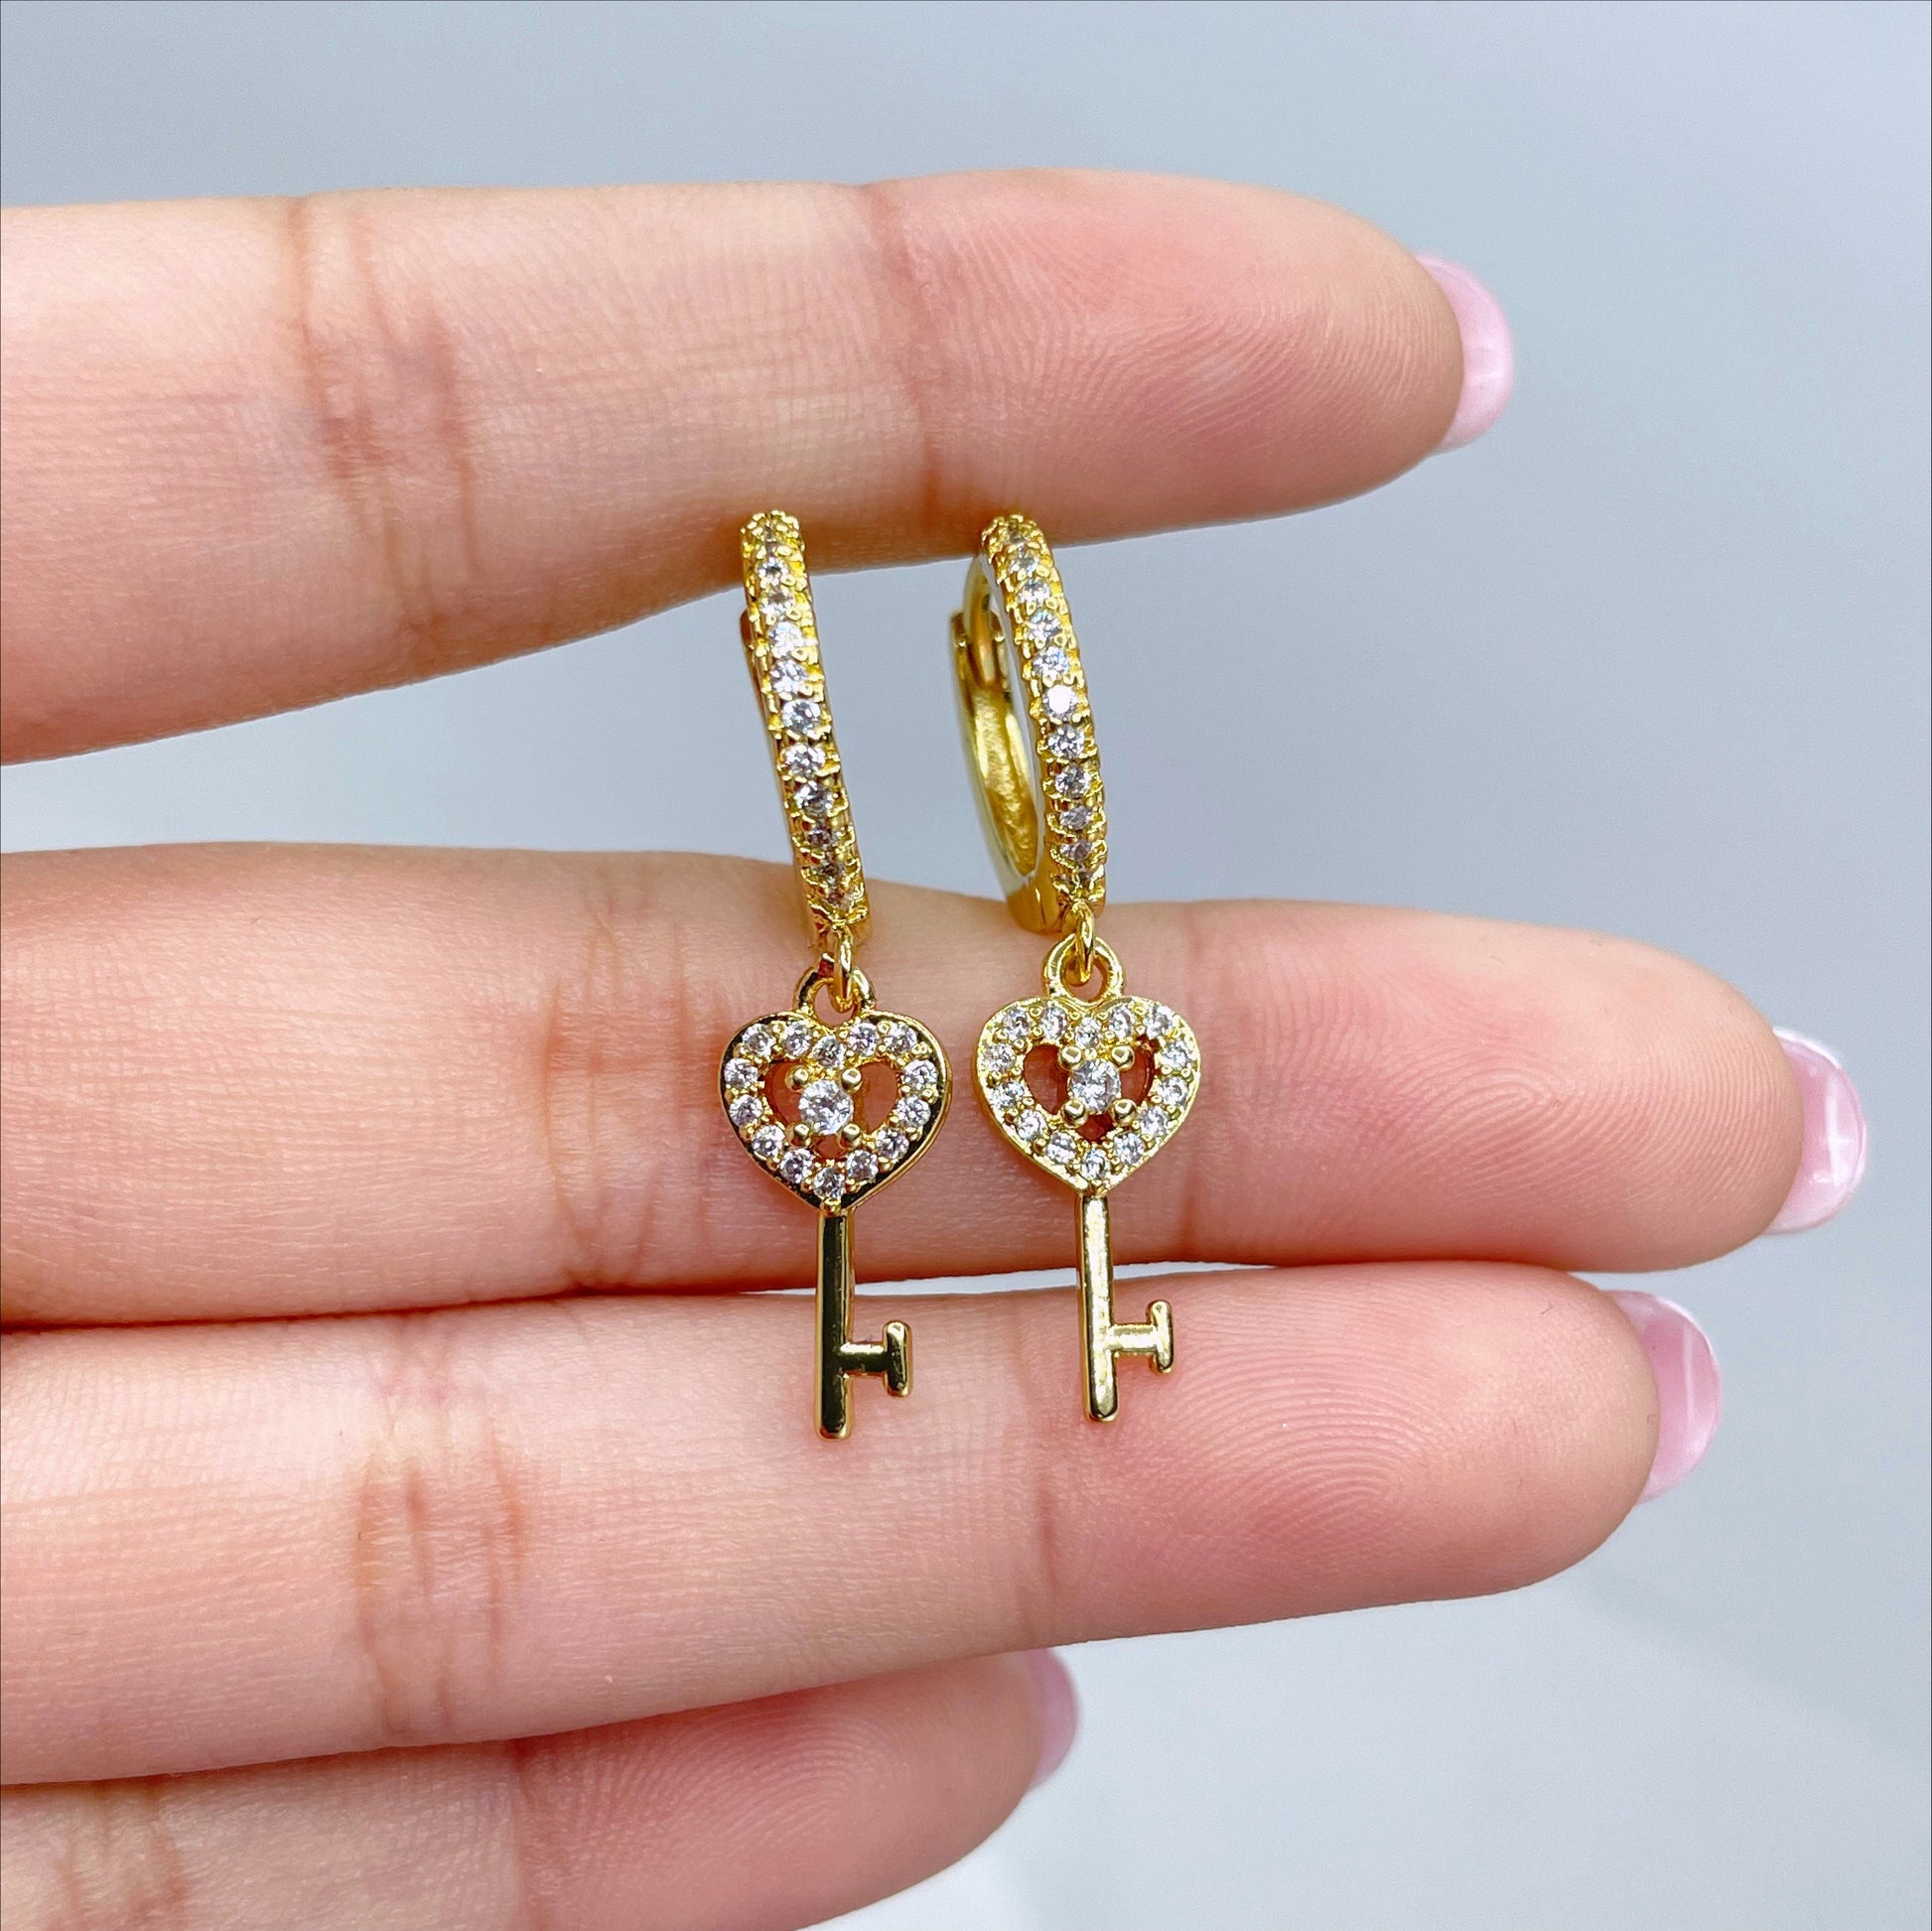 18k Gold Filled 15mm Huggie Earrings with Micro Cubic Zirconia Key in Heart Shape Charm, Dangle Earrings, Wholesale Jewelry Making Supplies